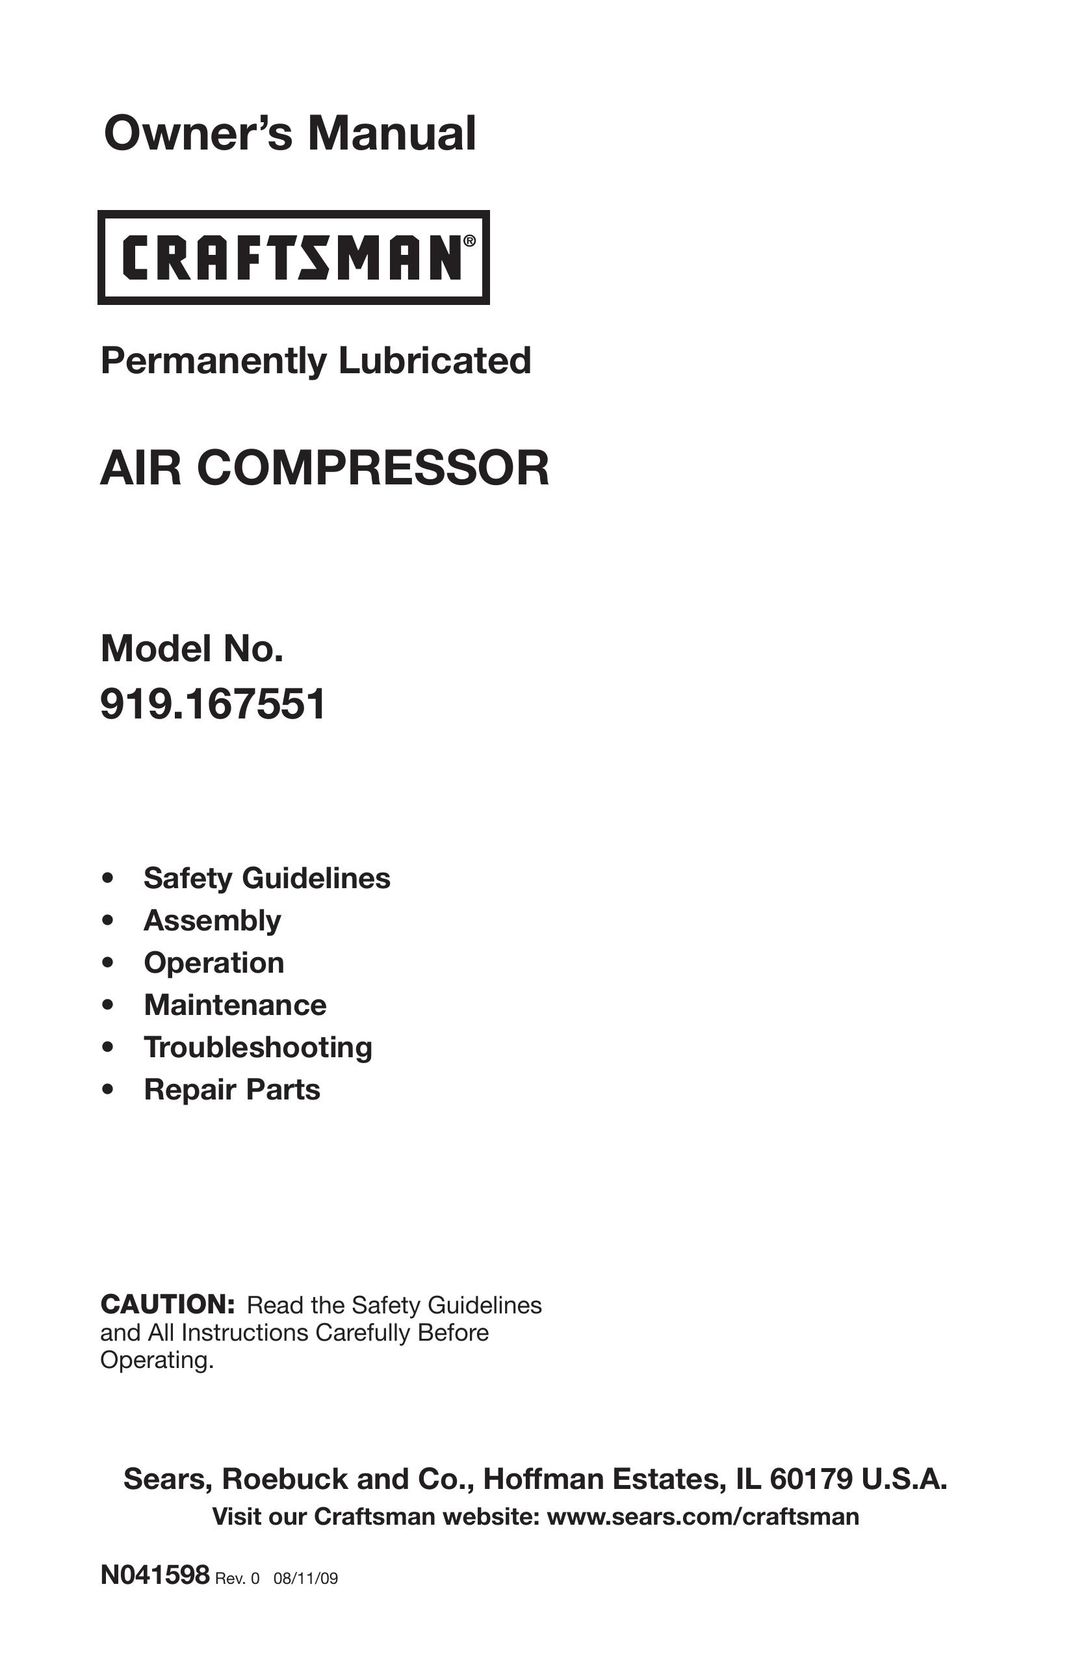 Craftsman 919.167551 Air Compressor User Manual